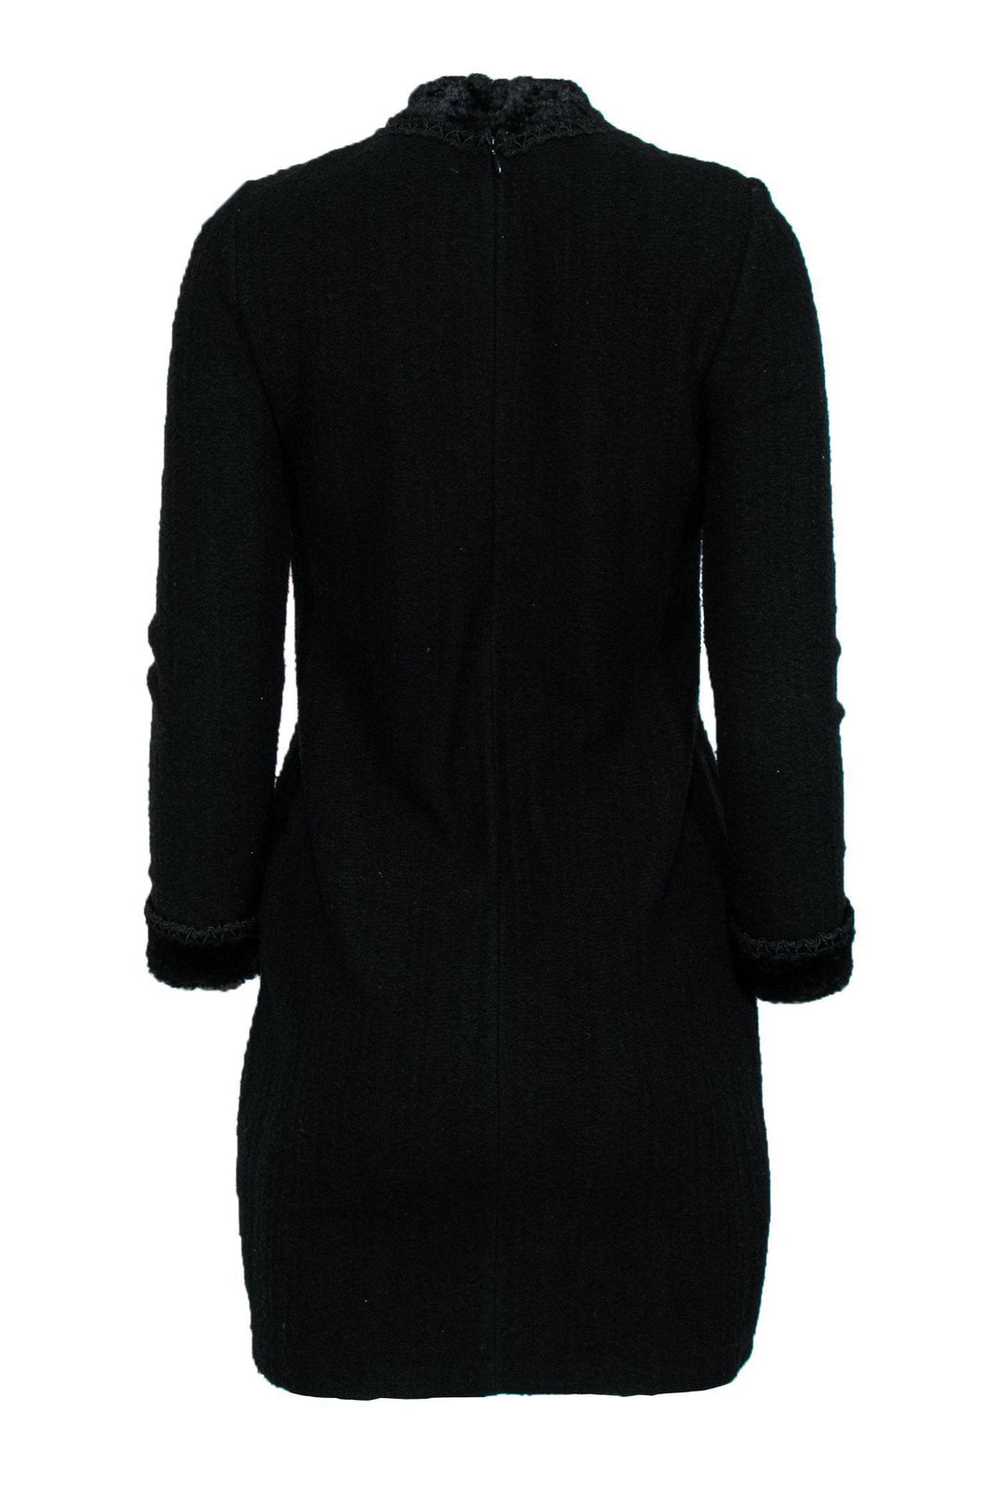 St. John - Black Vintage Wool Mock Neck Dress w/ … - image 3